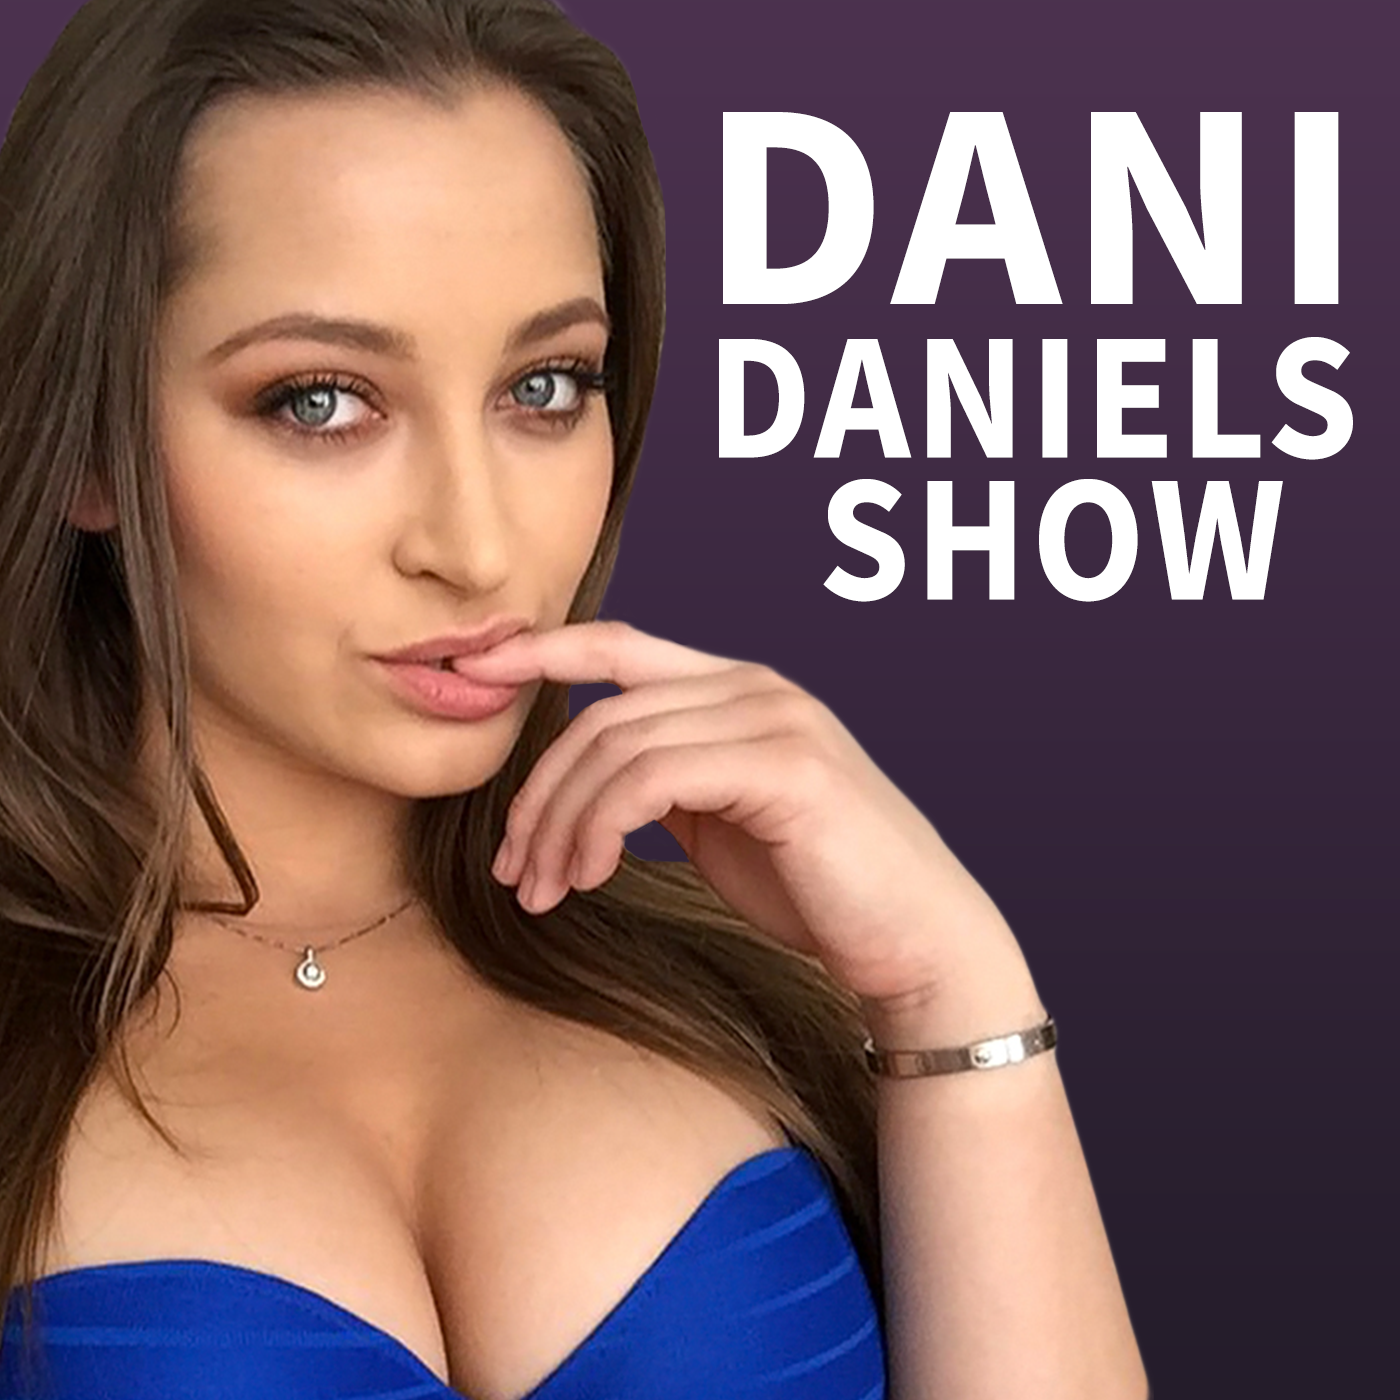 Dani daniels and lily love